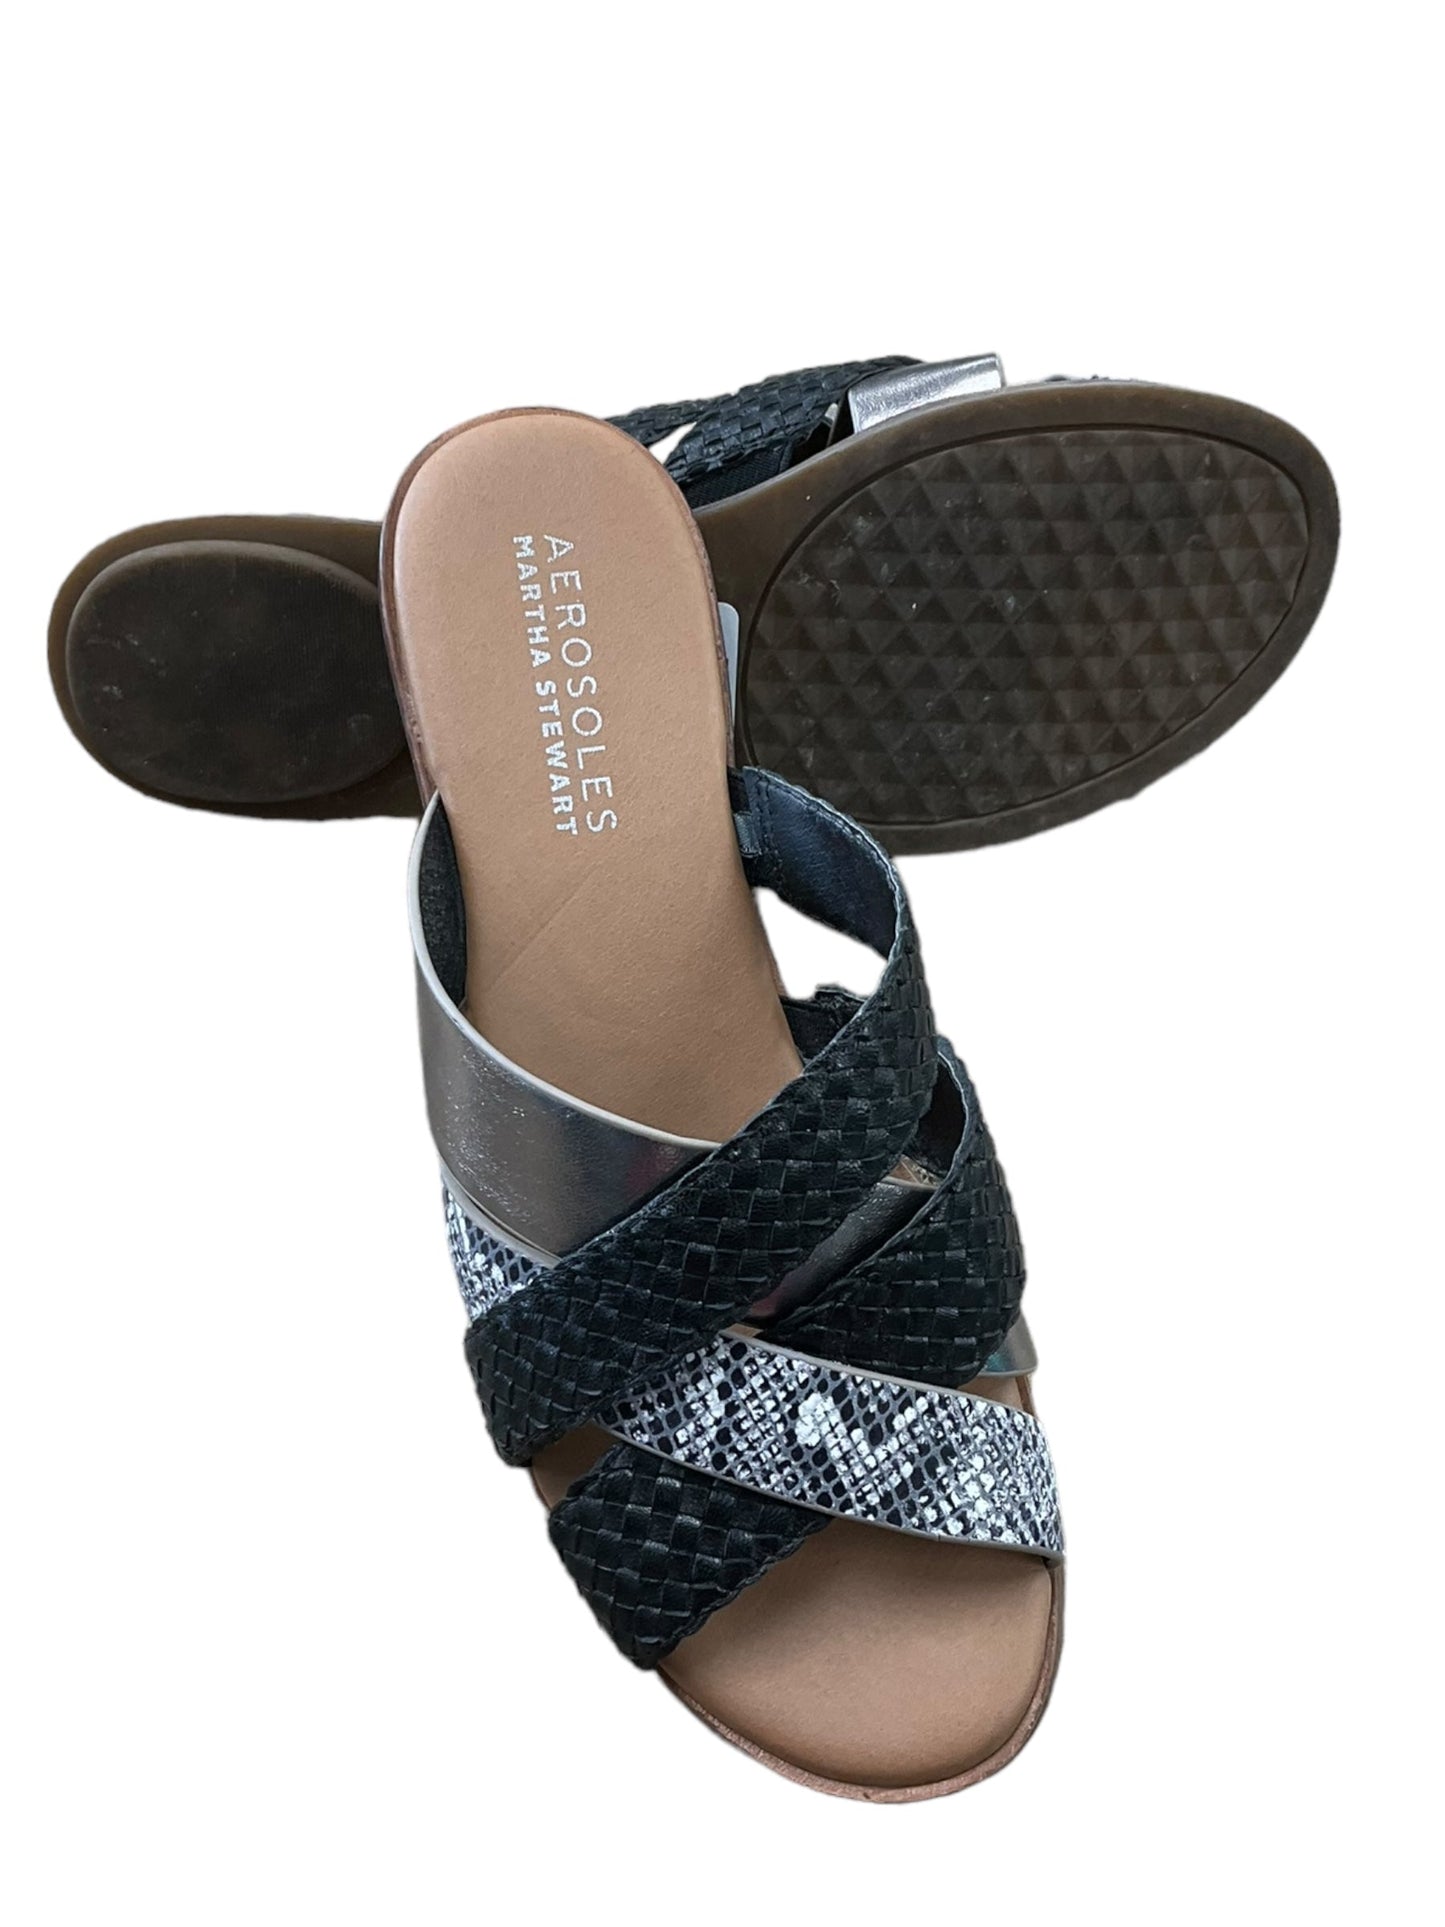 Animal Print Sandals Flats Aerosoles, Size 6.5